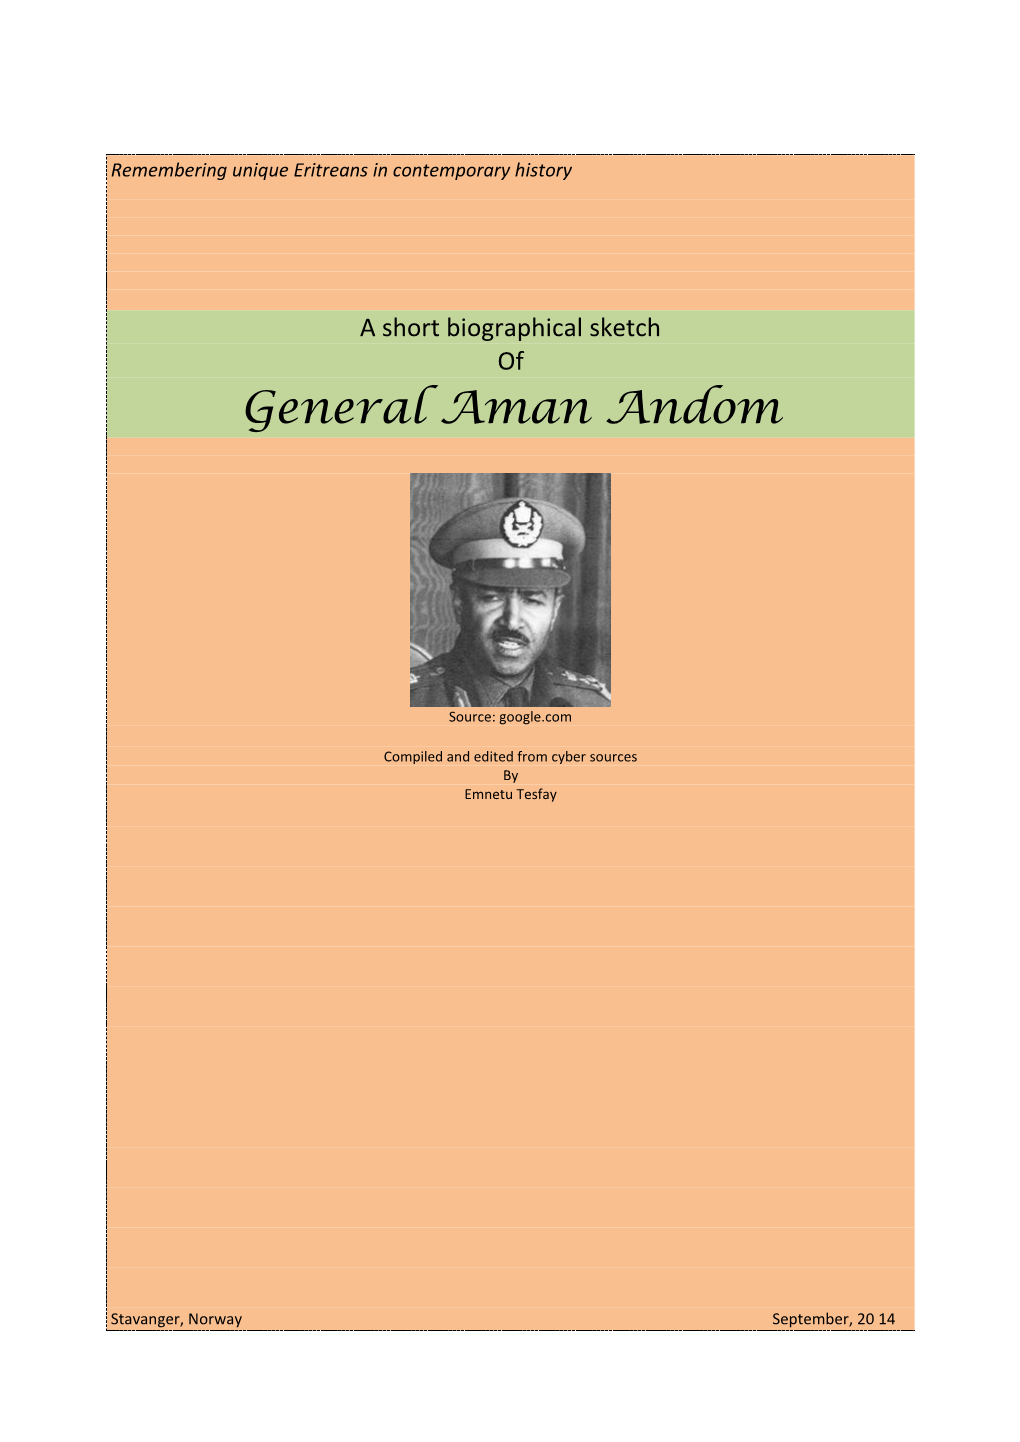 General Aman Andom